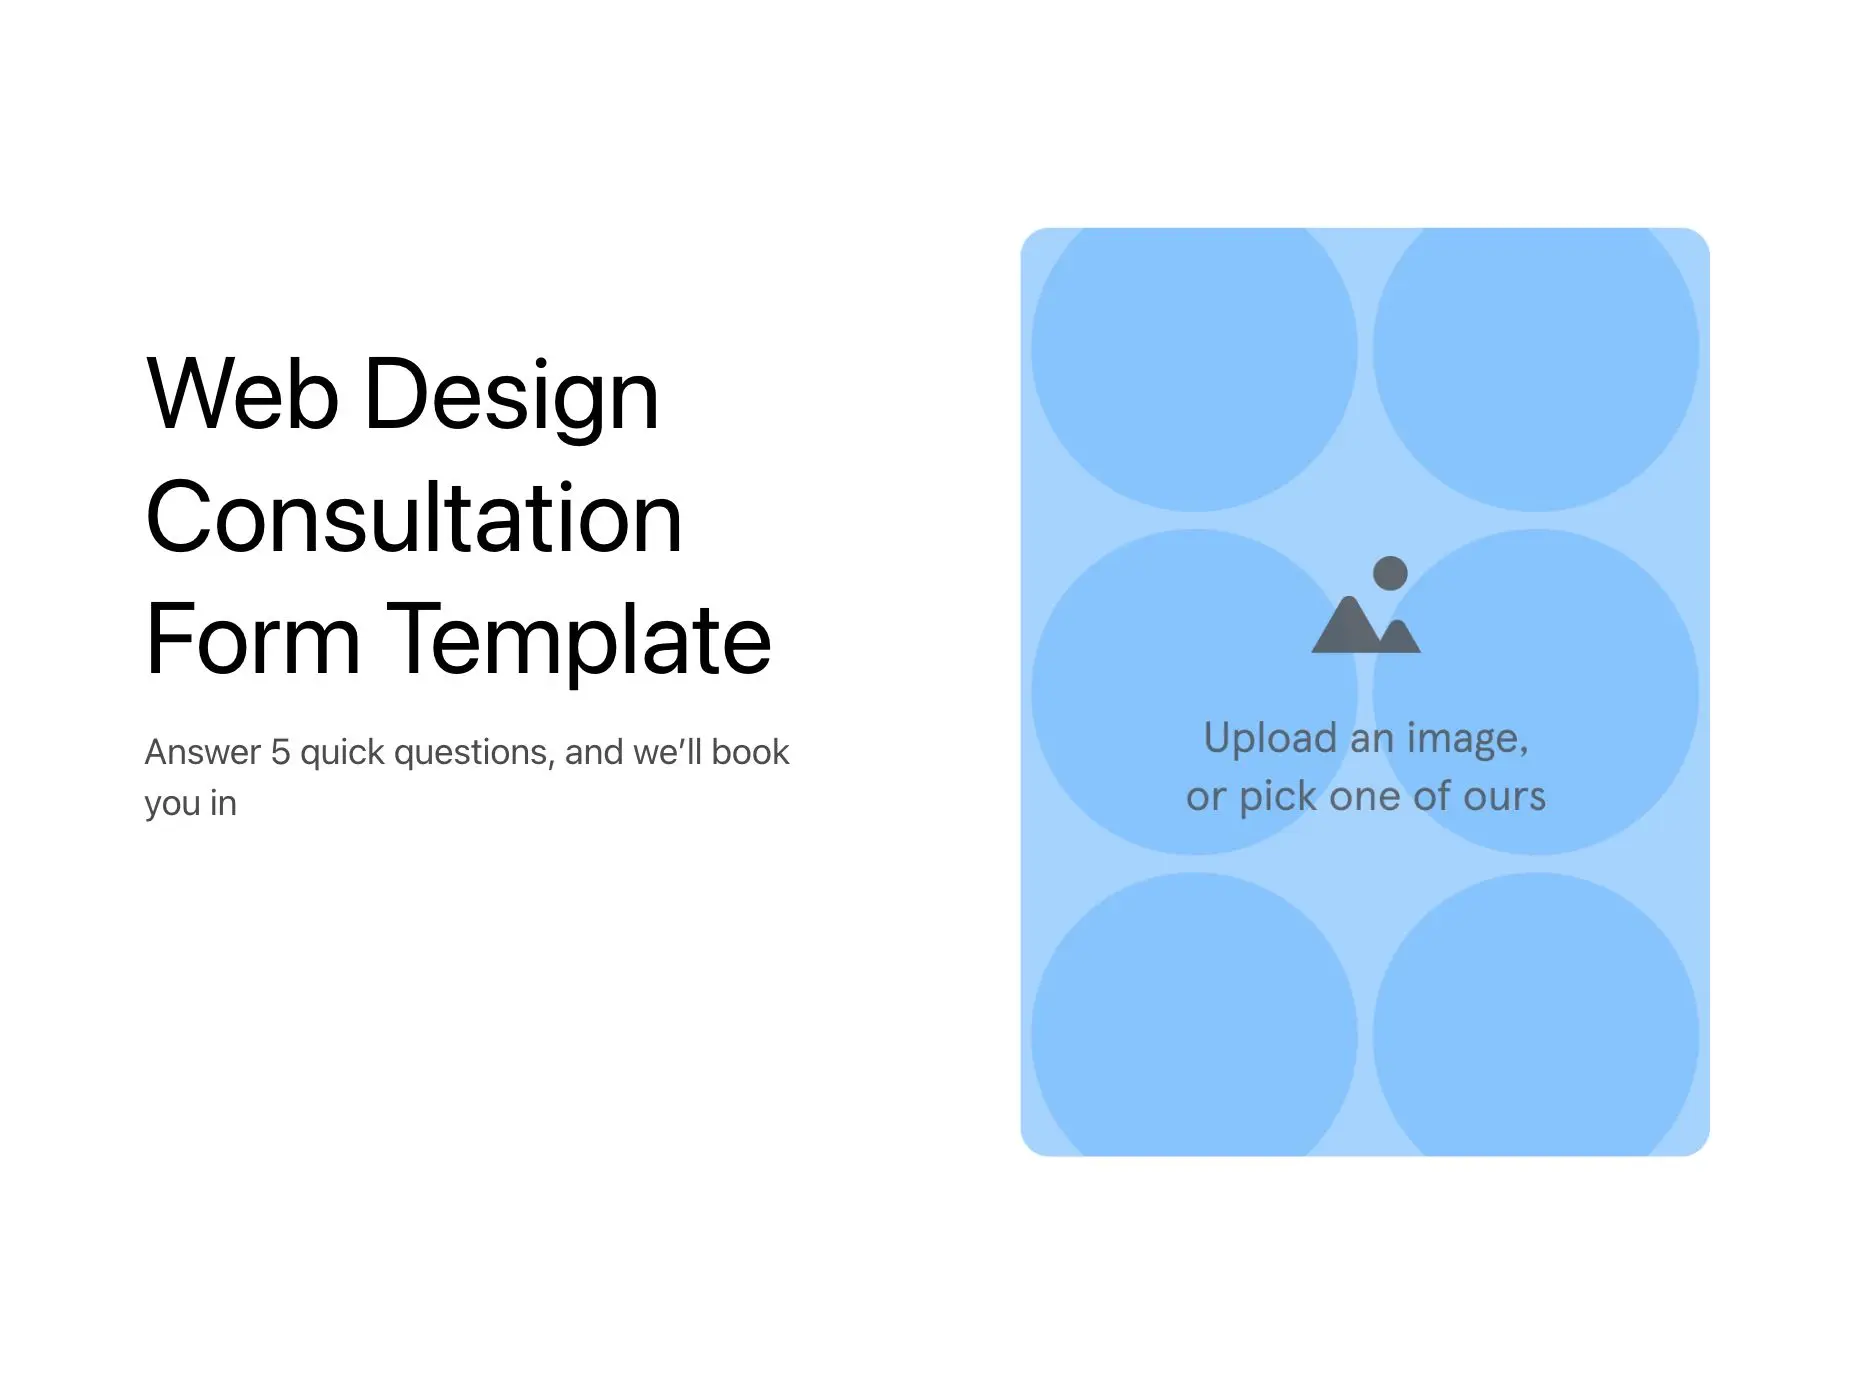 Web Design Consultation Form Template Hero